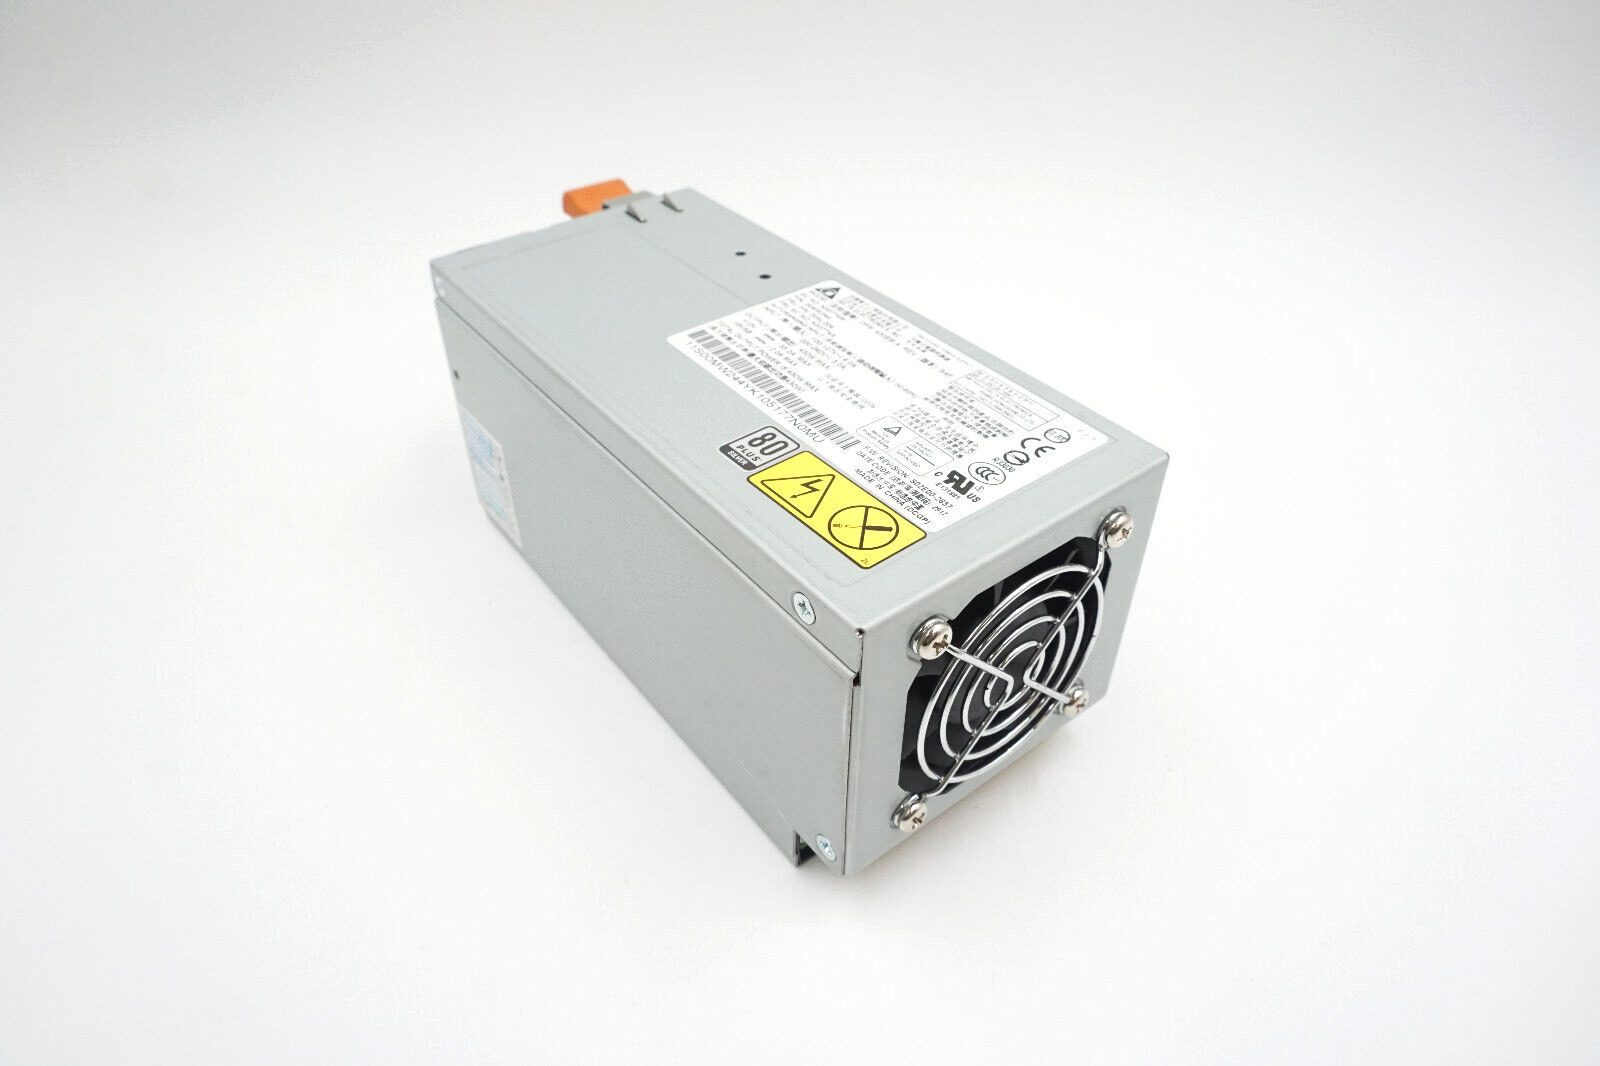 IBM DPS-430EB A 430W Redundant Power Supply for X3100 M5 FRU P/N: 00MW244 Tested